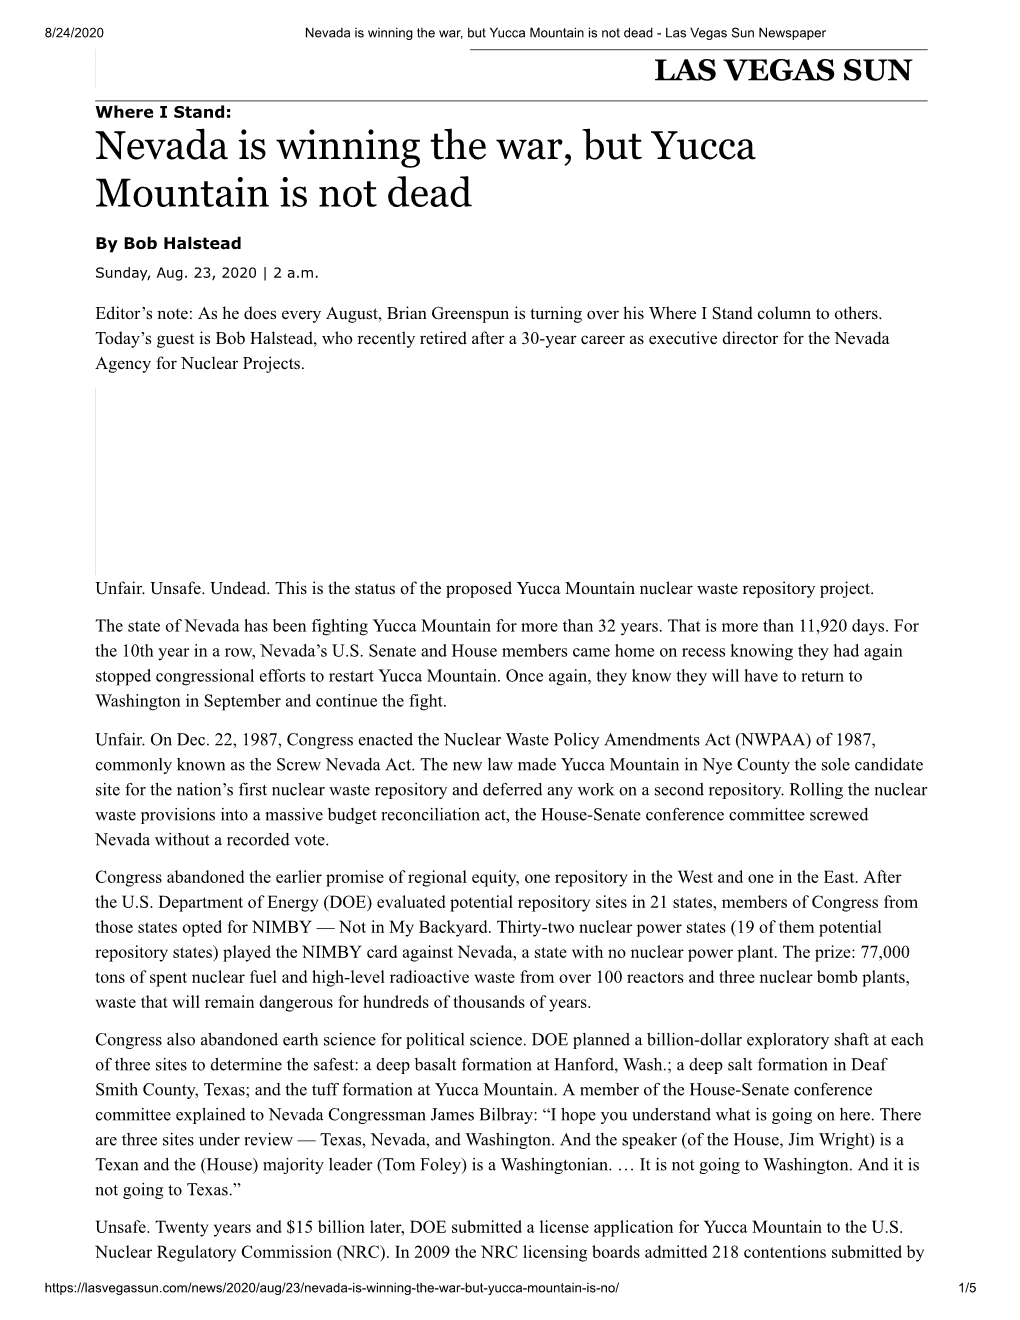 Nevada Is Winning the War, but Yucca Mountain Is Not Dead - Las Vegas Sun Newspaper LAS VEGAS SUN